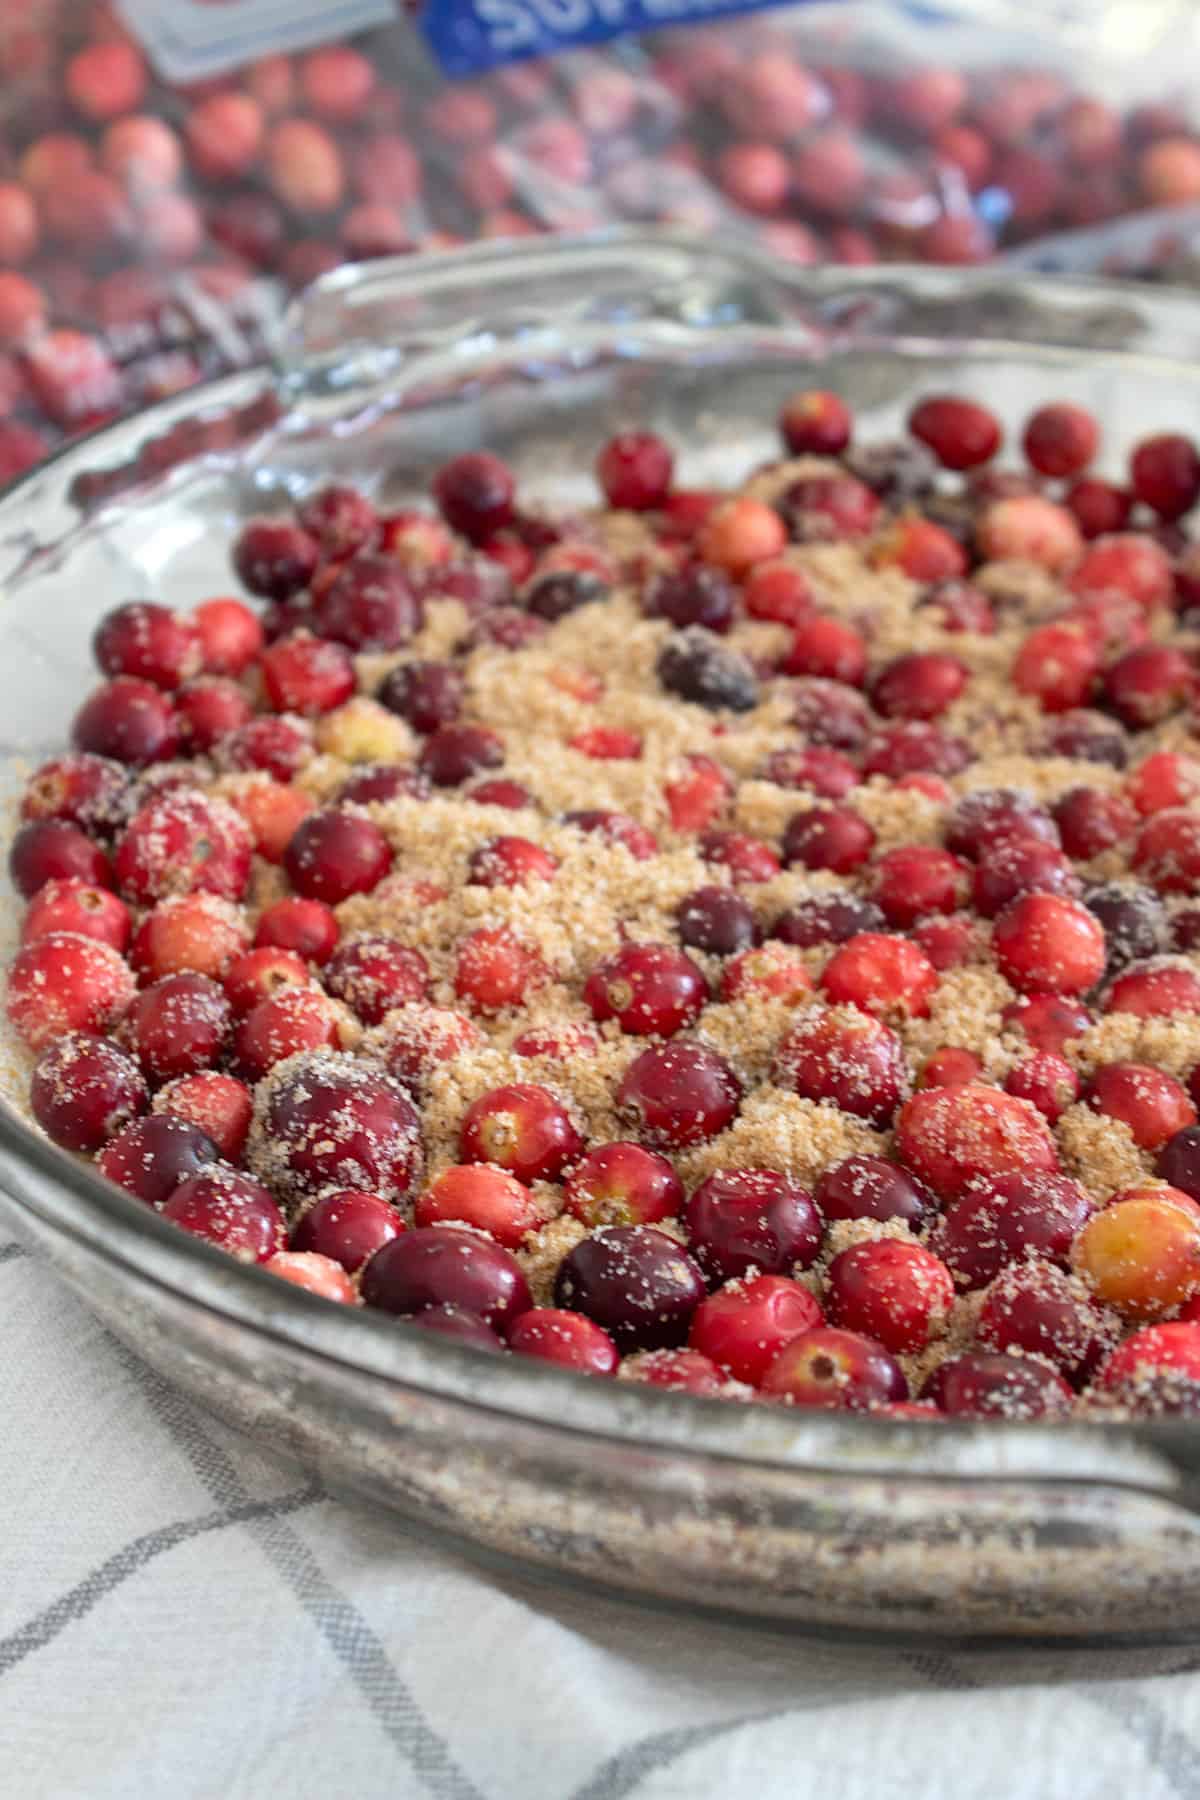 pressing down on cranberries in cake pan